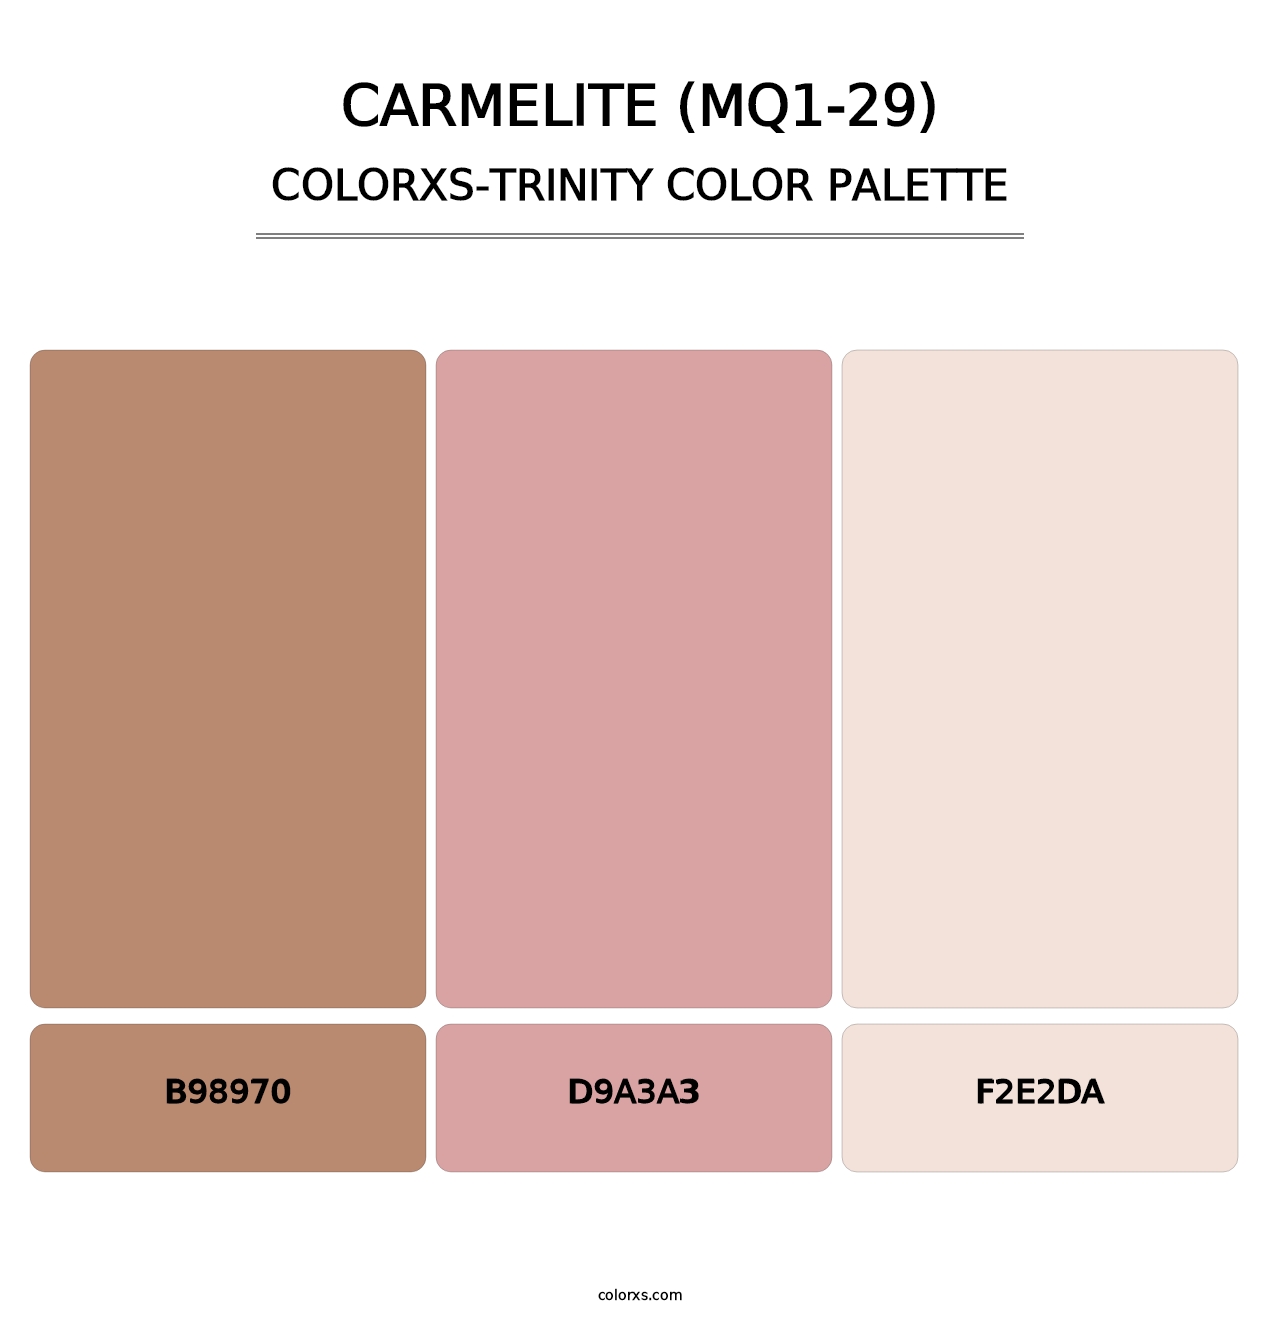 Carmelite (MQ1-29) - Colorxs Trinity Palette